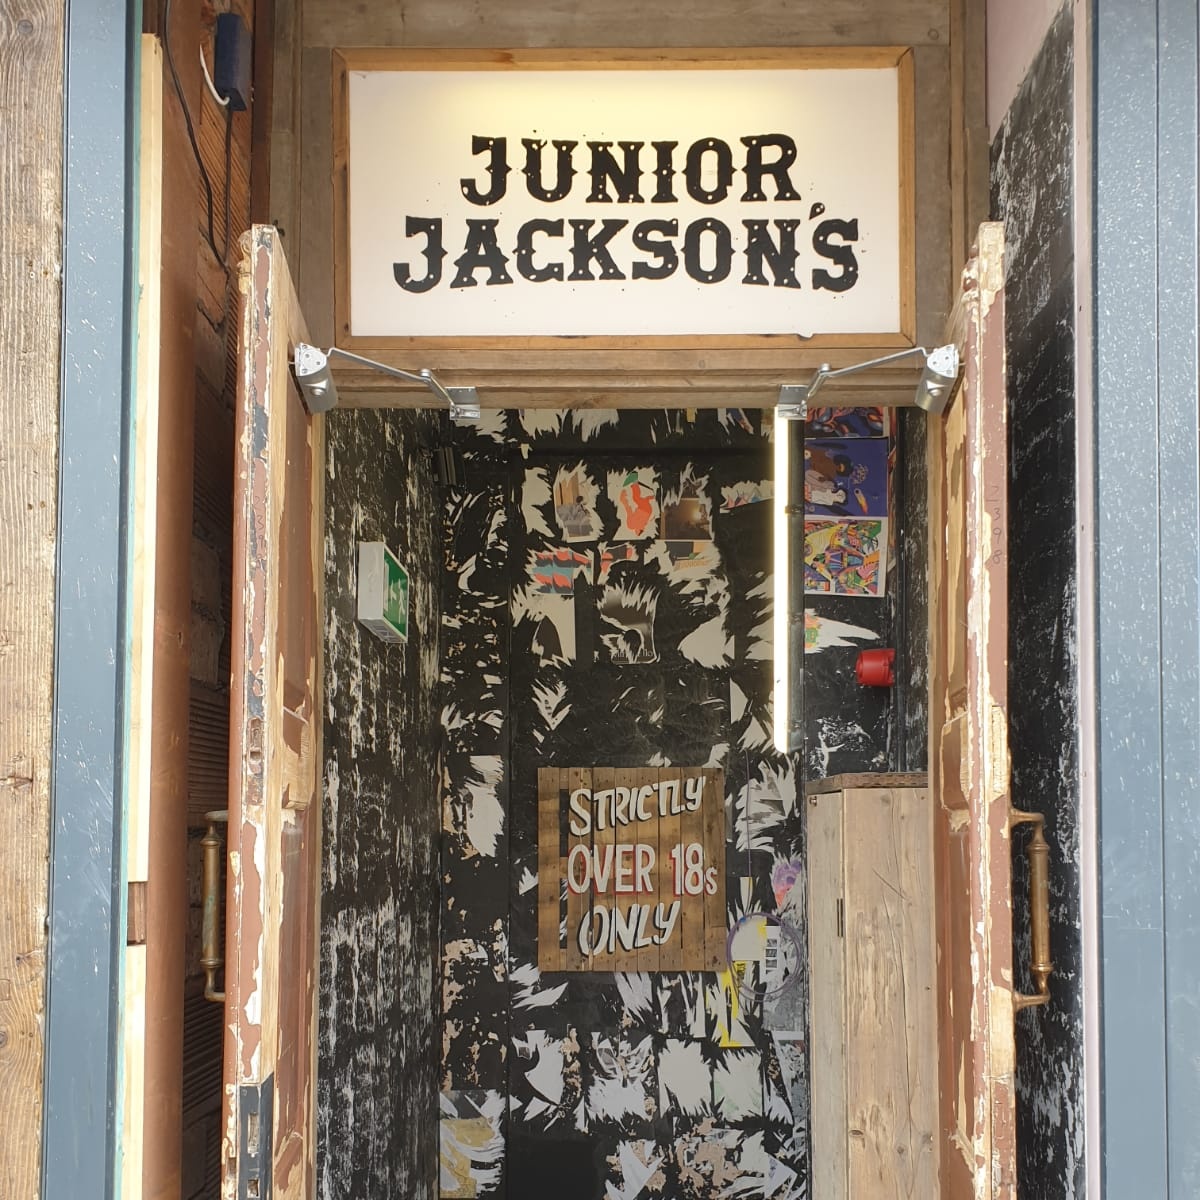 Where is Junior Jackson's?